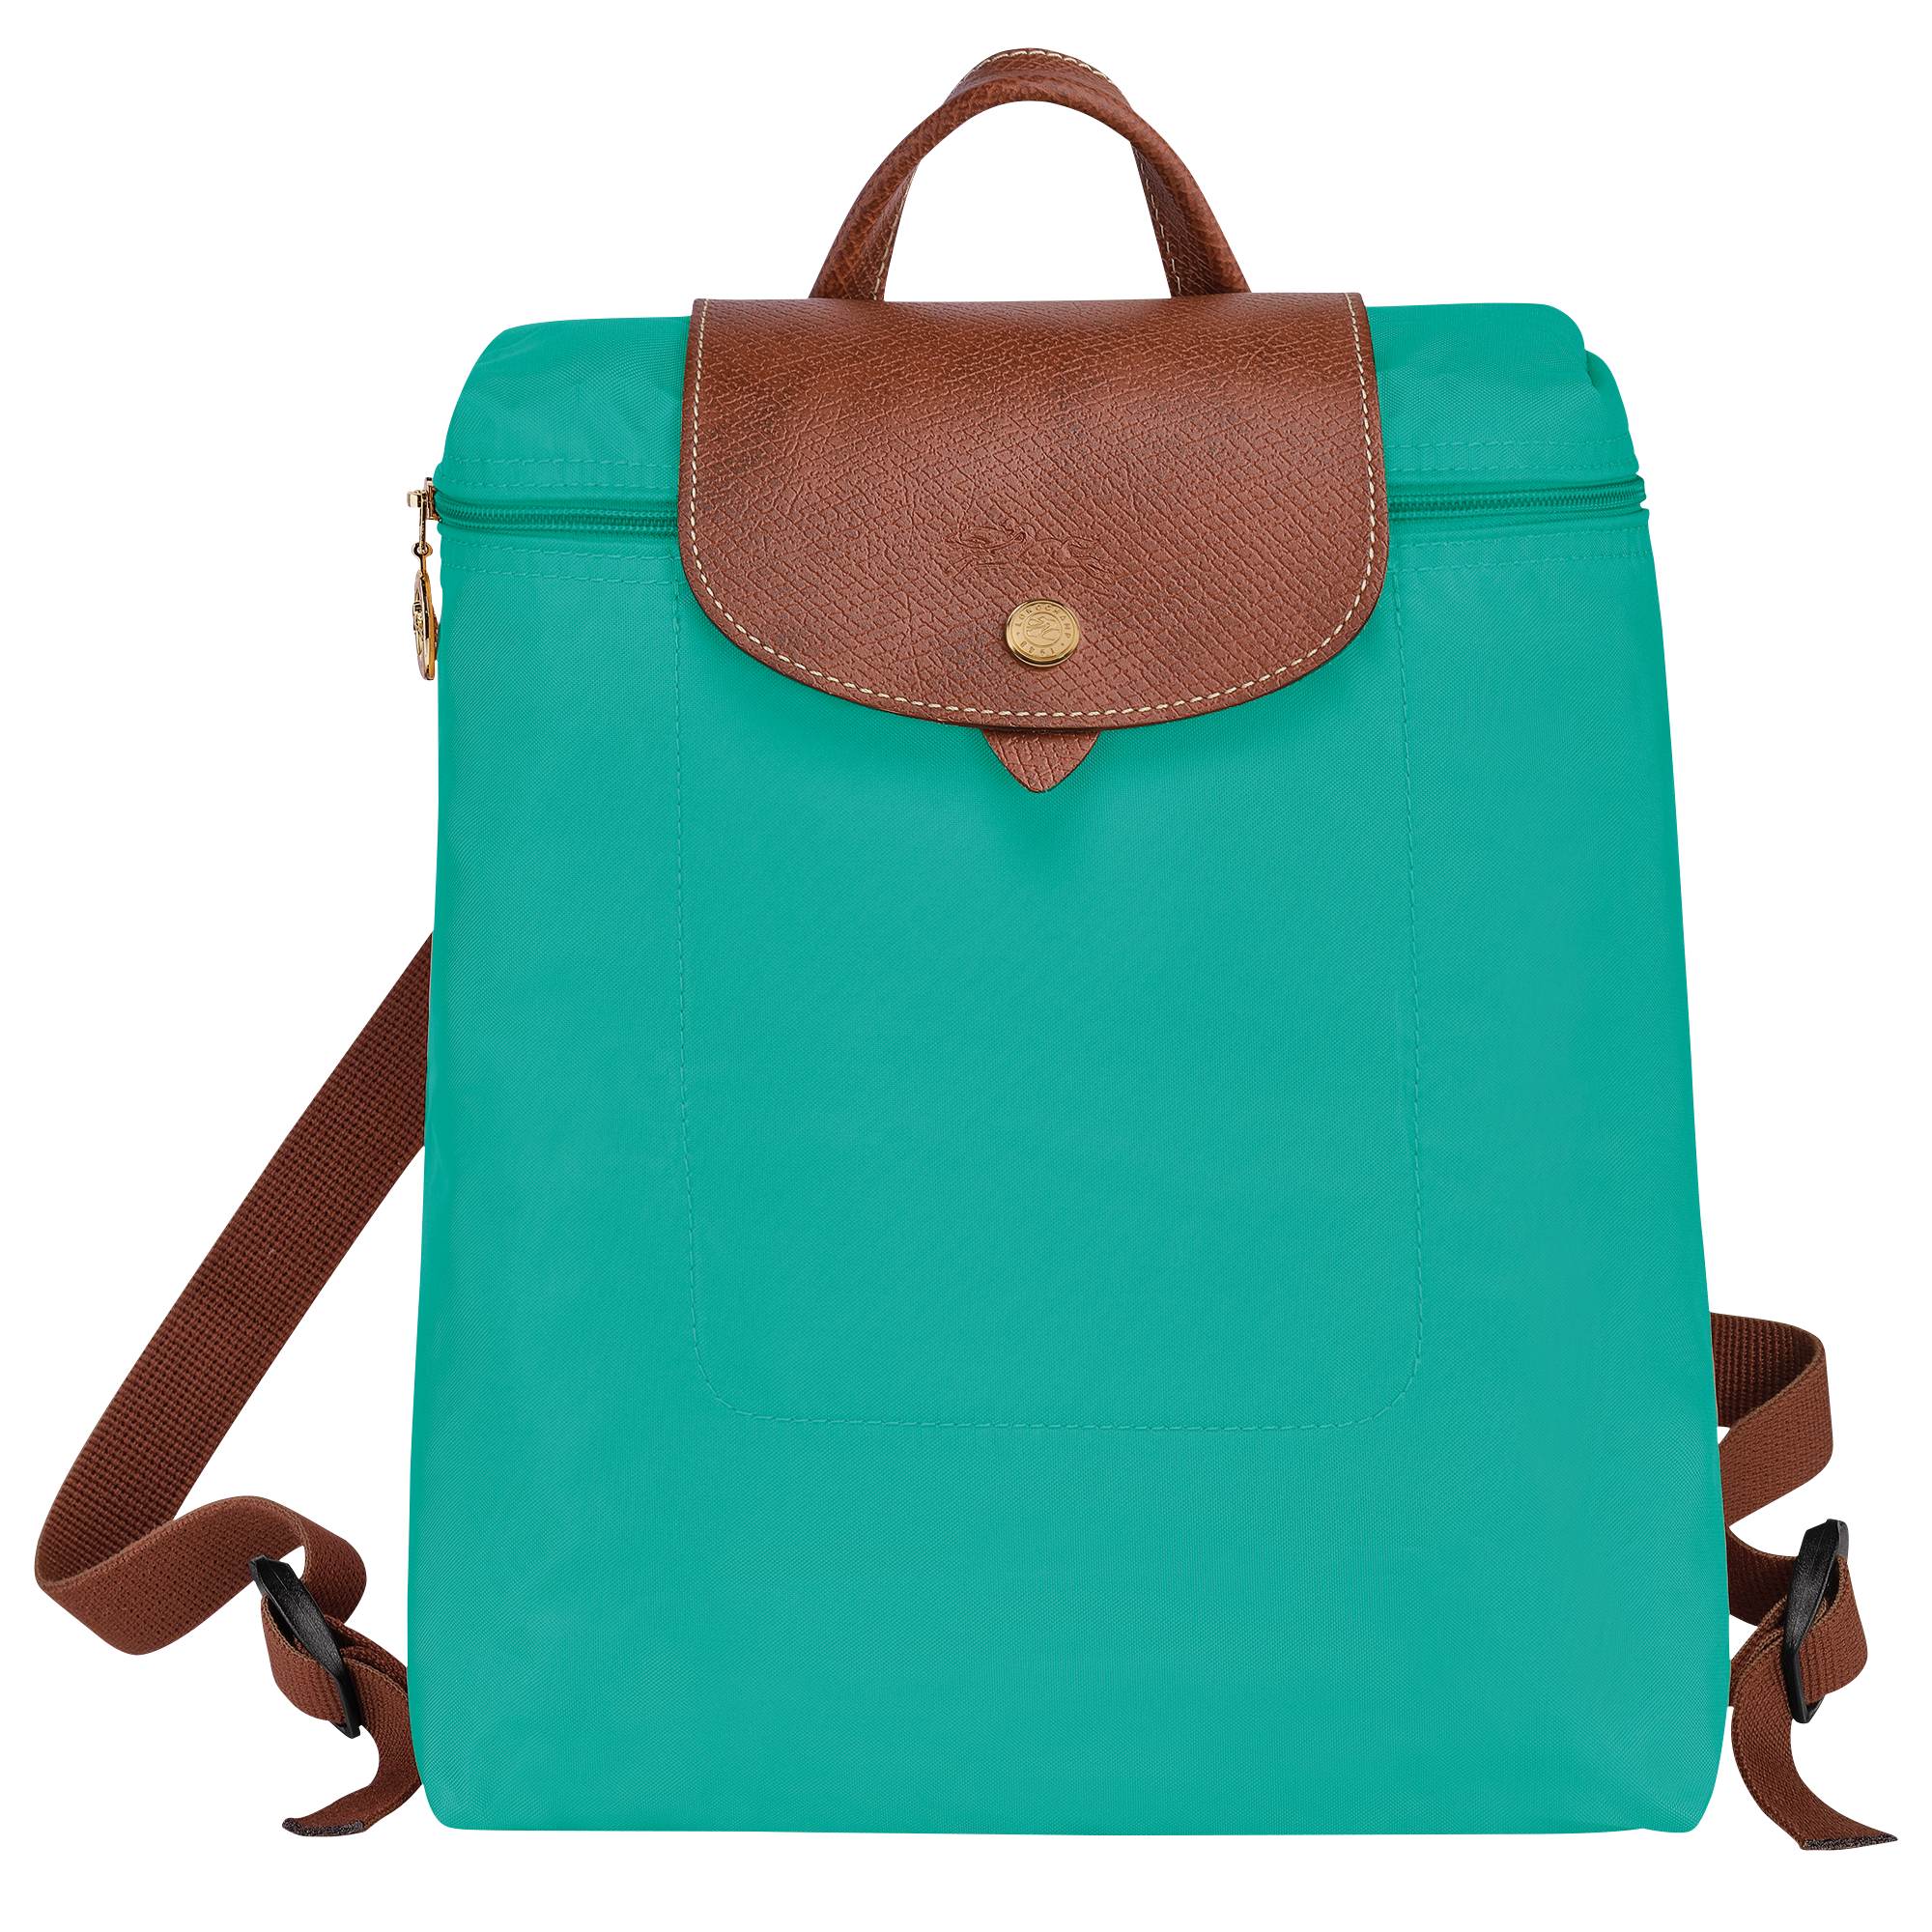 Le Pliage Original Backpack, Turquoise